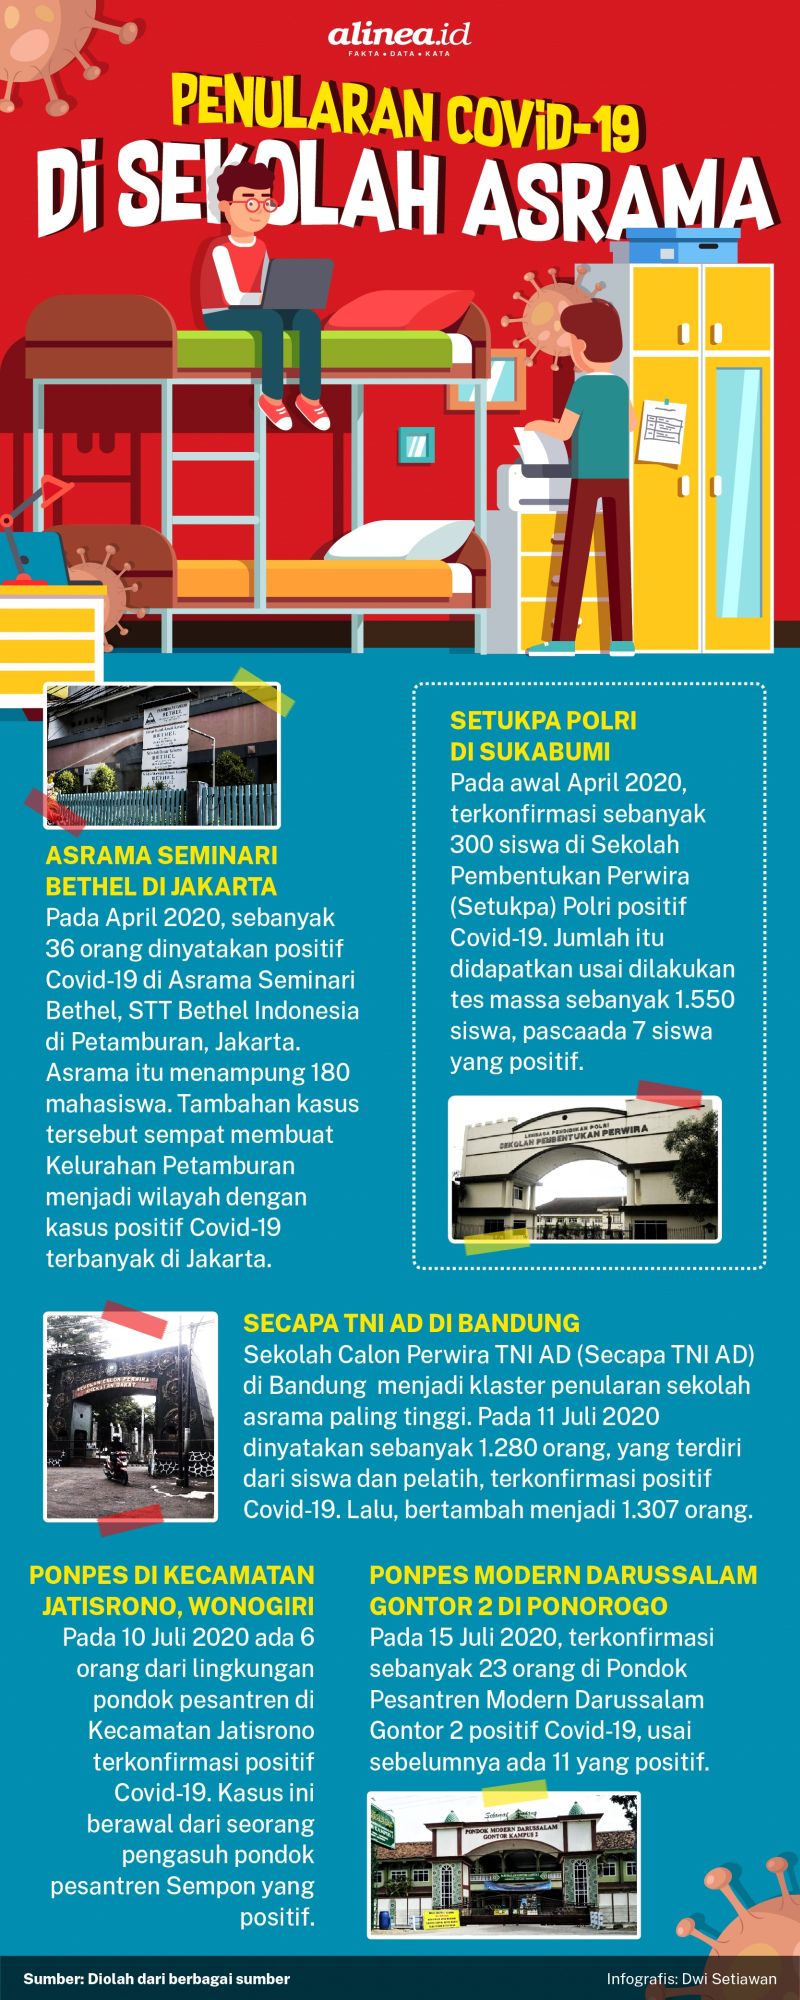 Infografik asrama sekolah. Alinea.id/Dwi Setiawan.